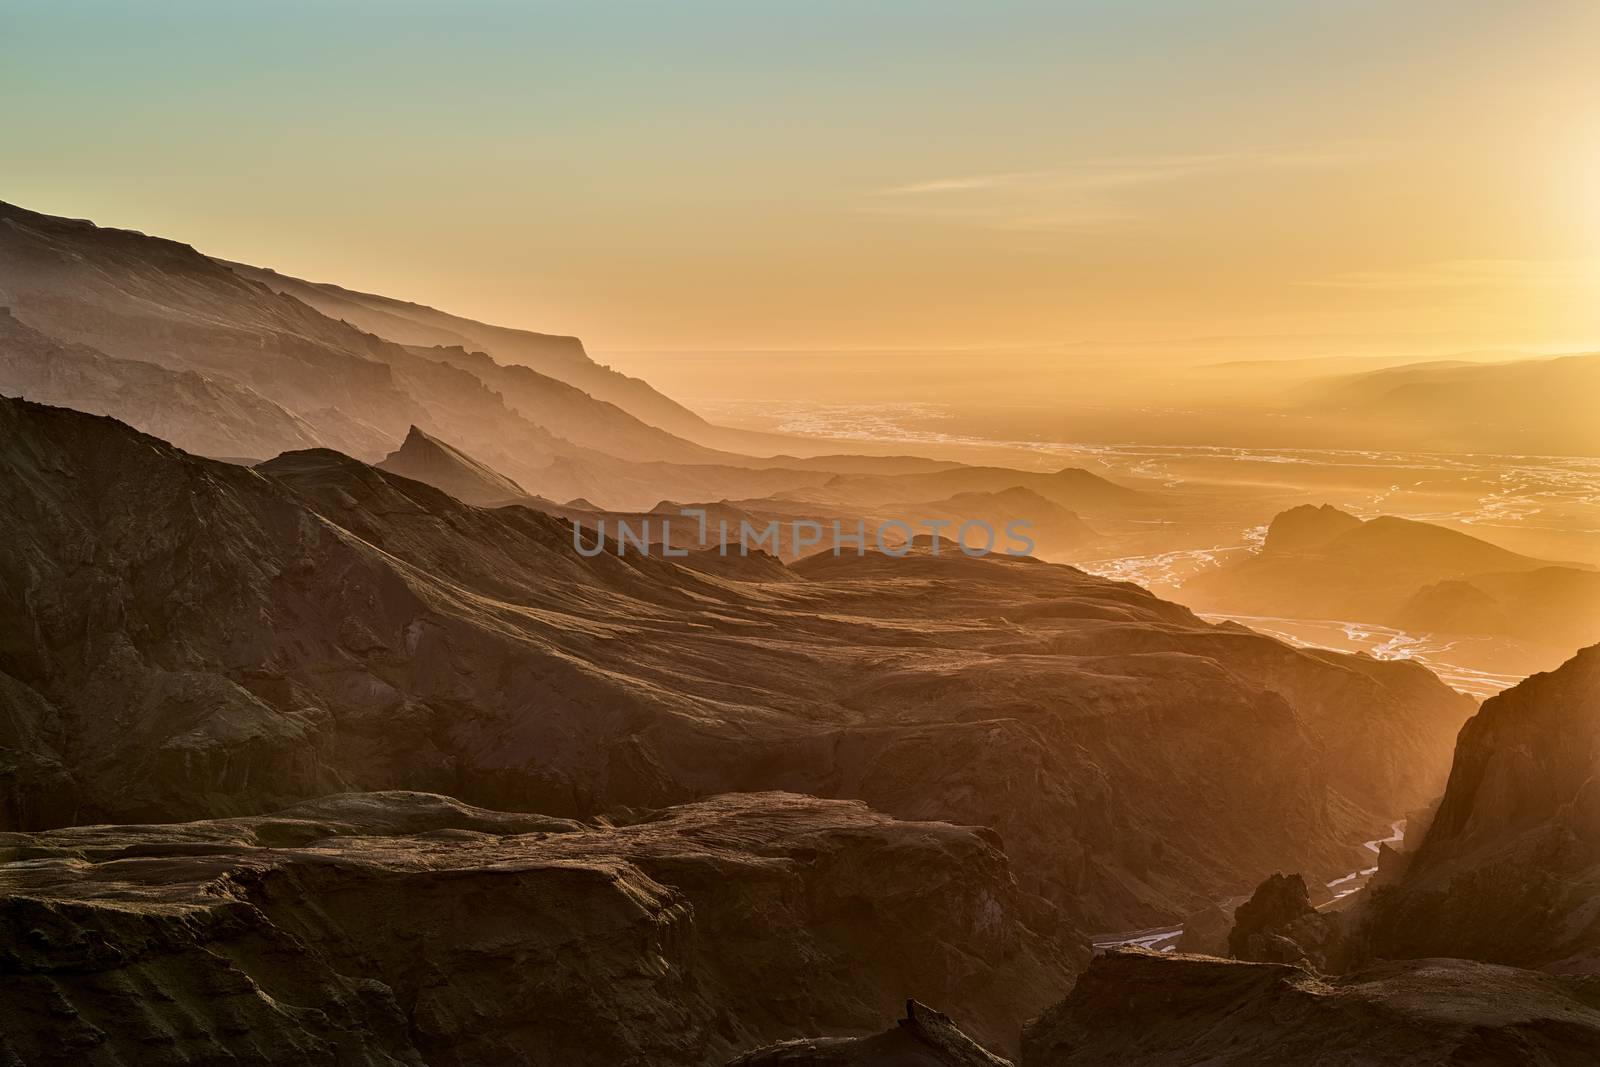 Thorsmork’s mountains at sunset, Iceland by LuigiMorbidelli